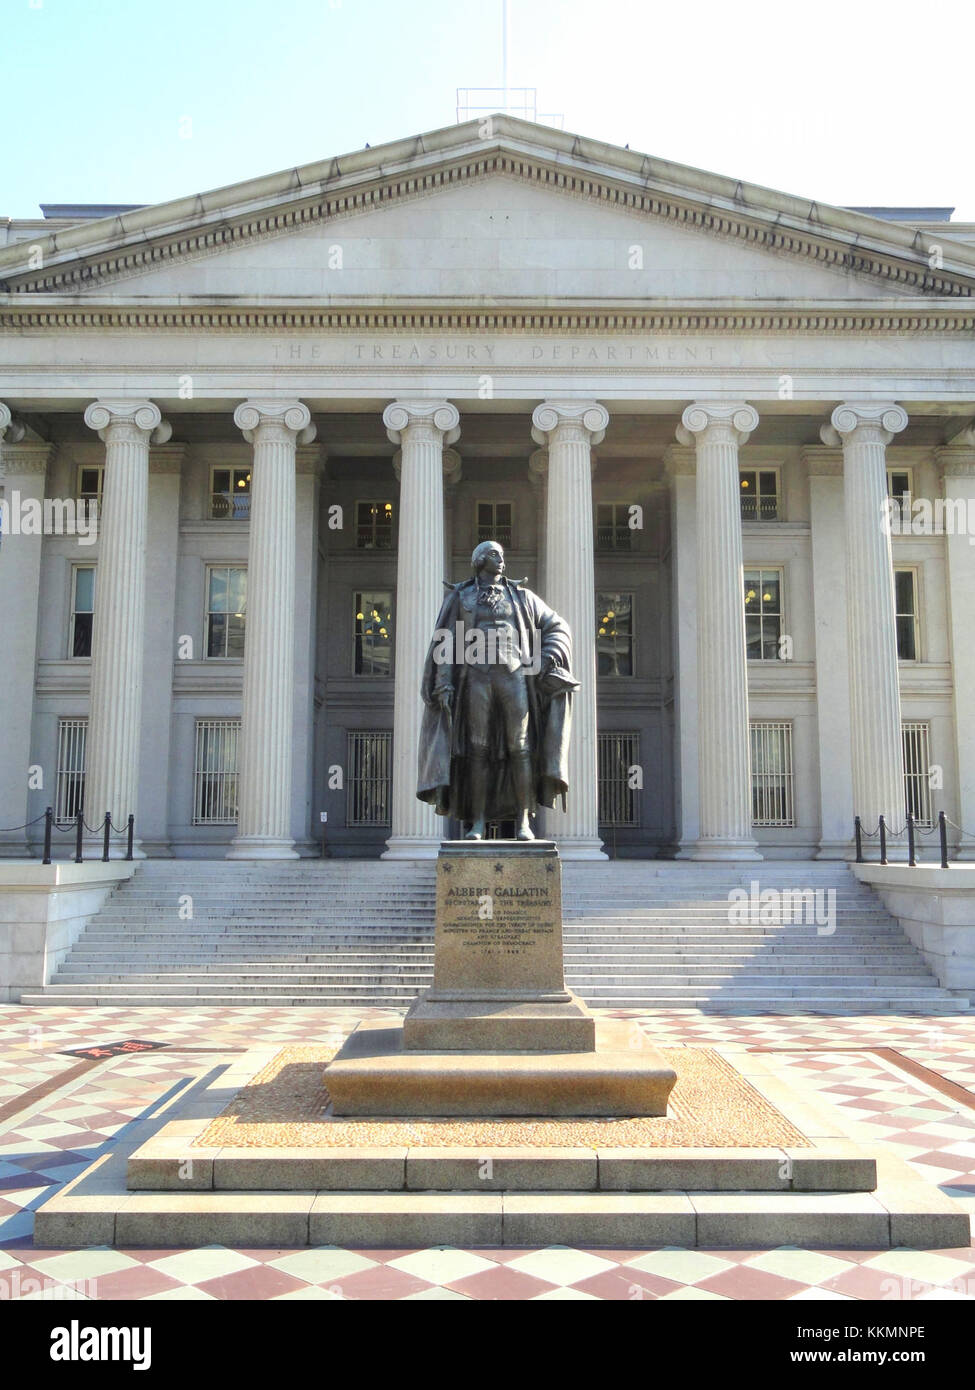 Statue d'Albert Gallatin (Washington, D.C.) - DSC08421 Banque D'Images